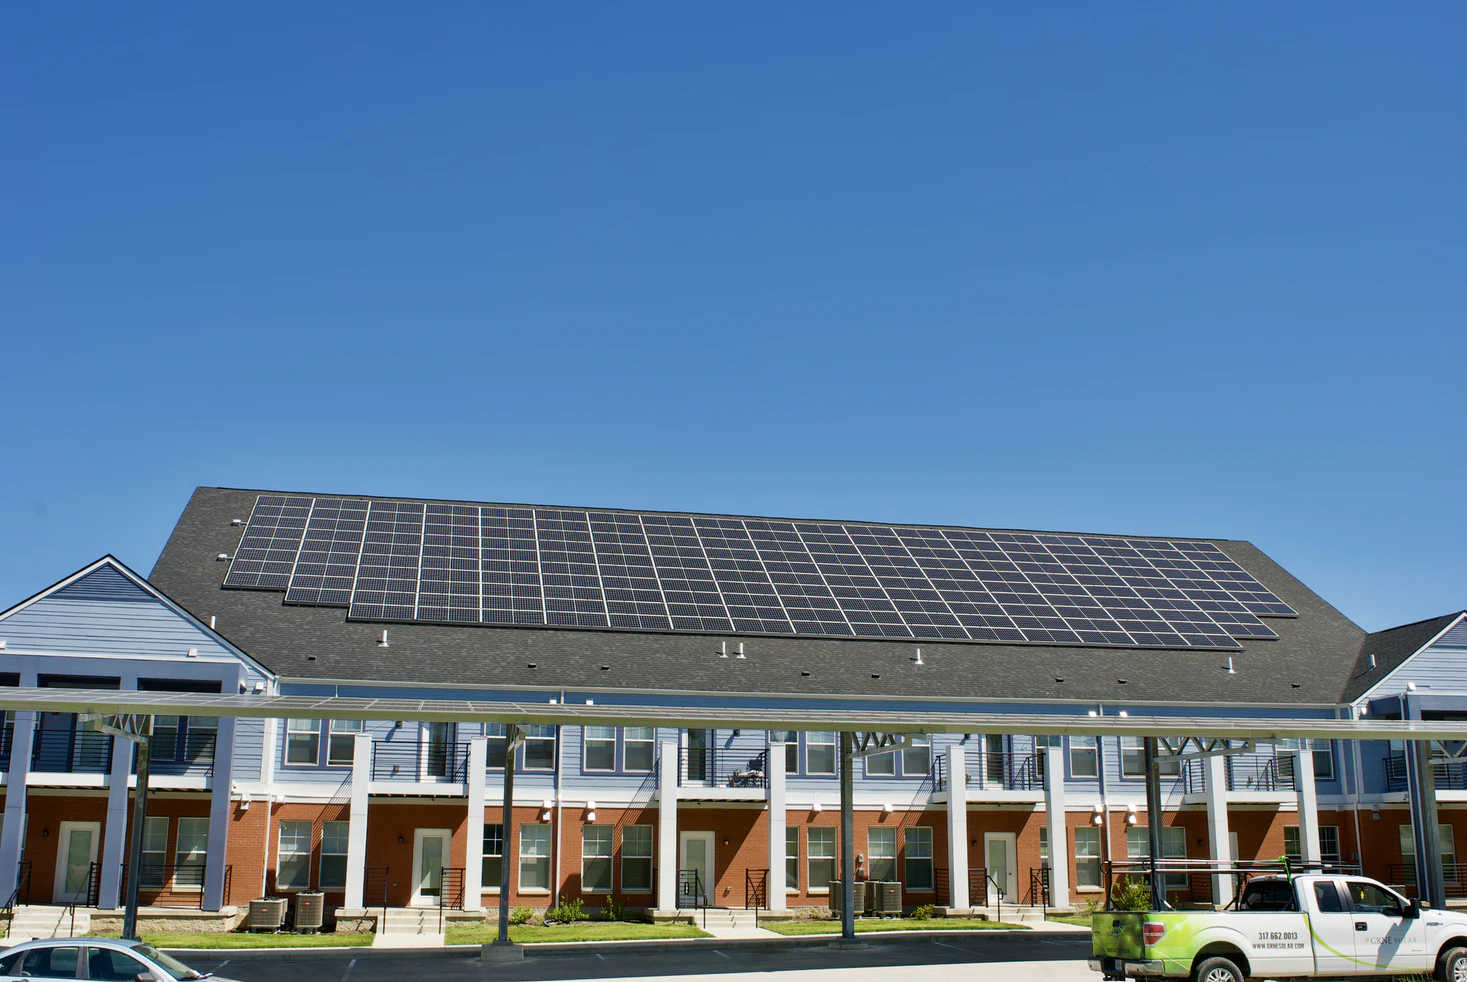 solar panels on roof.